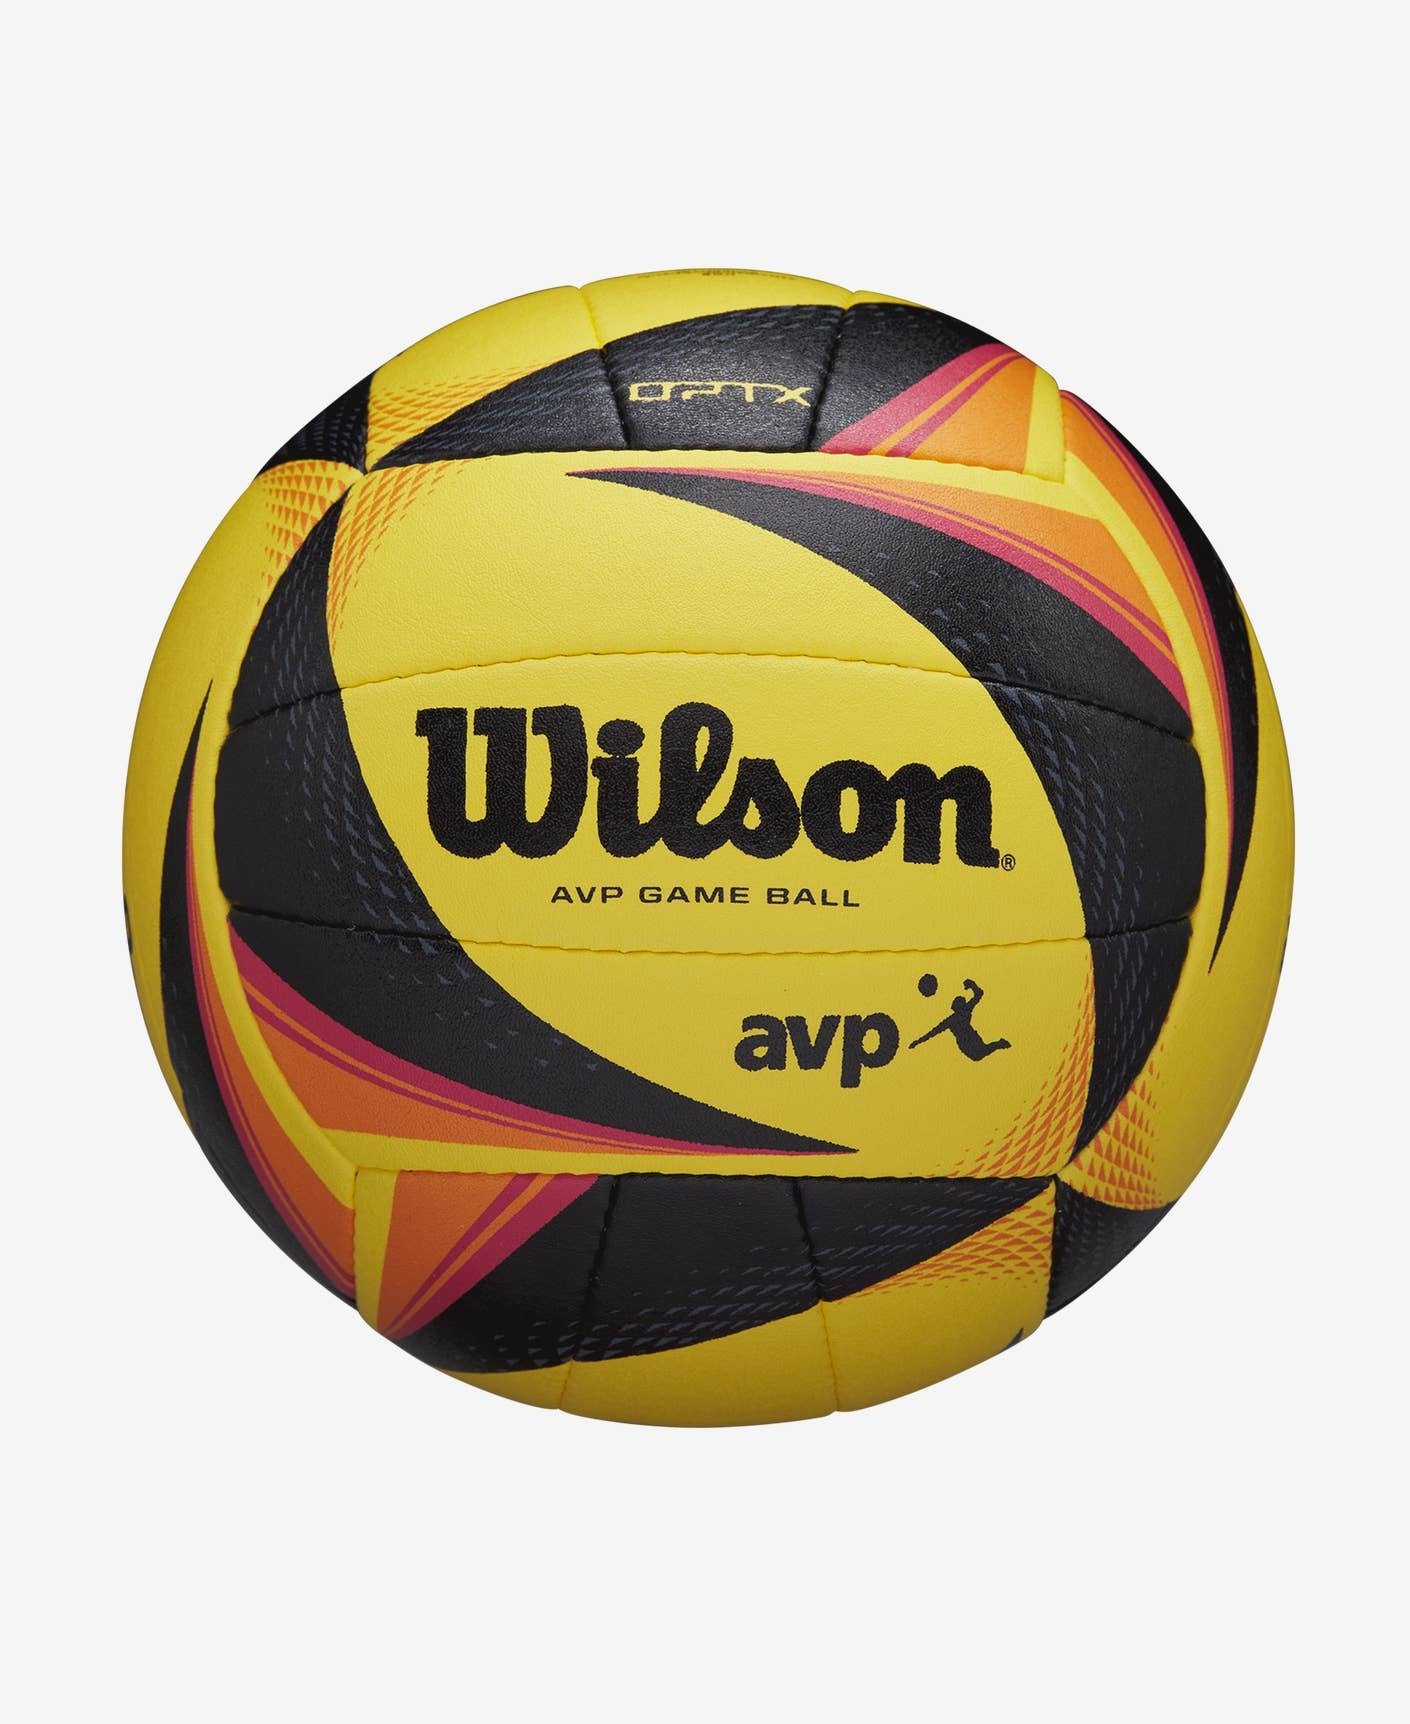 Pelota Voleibol Oficial Optx - Amarillo